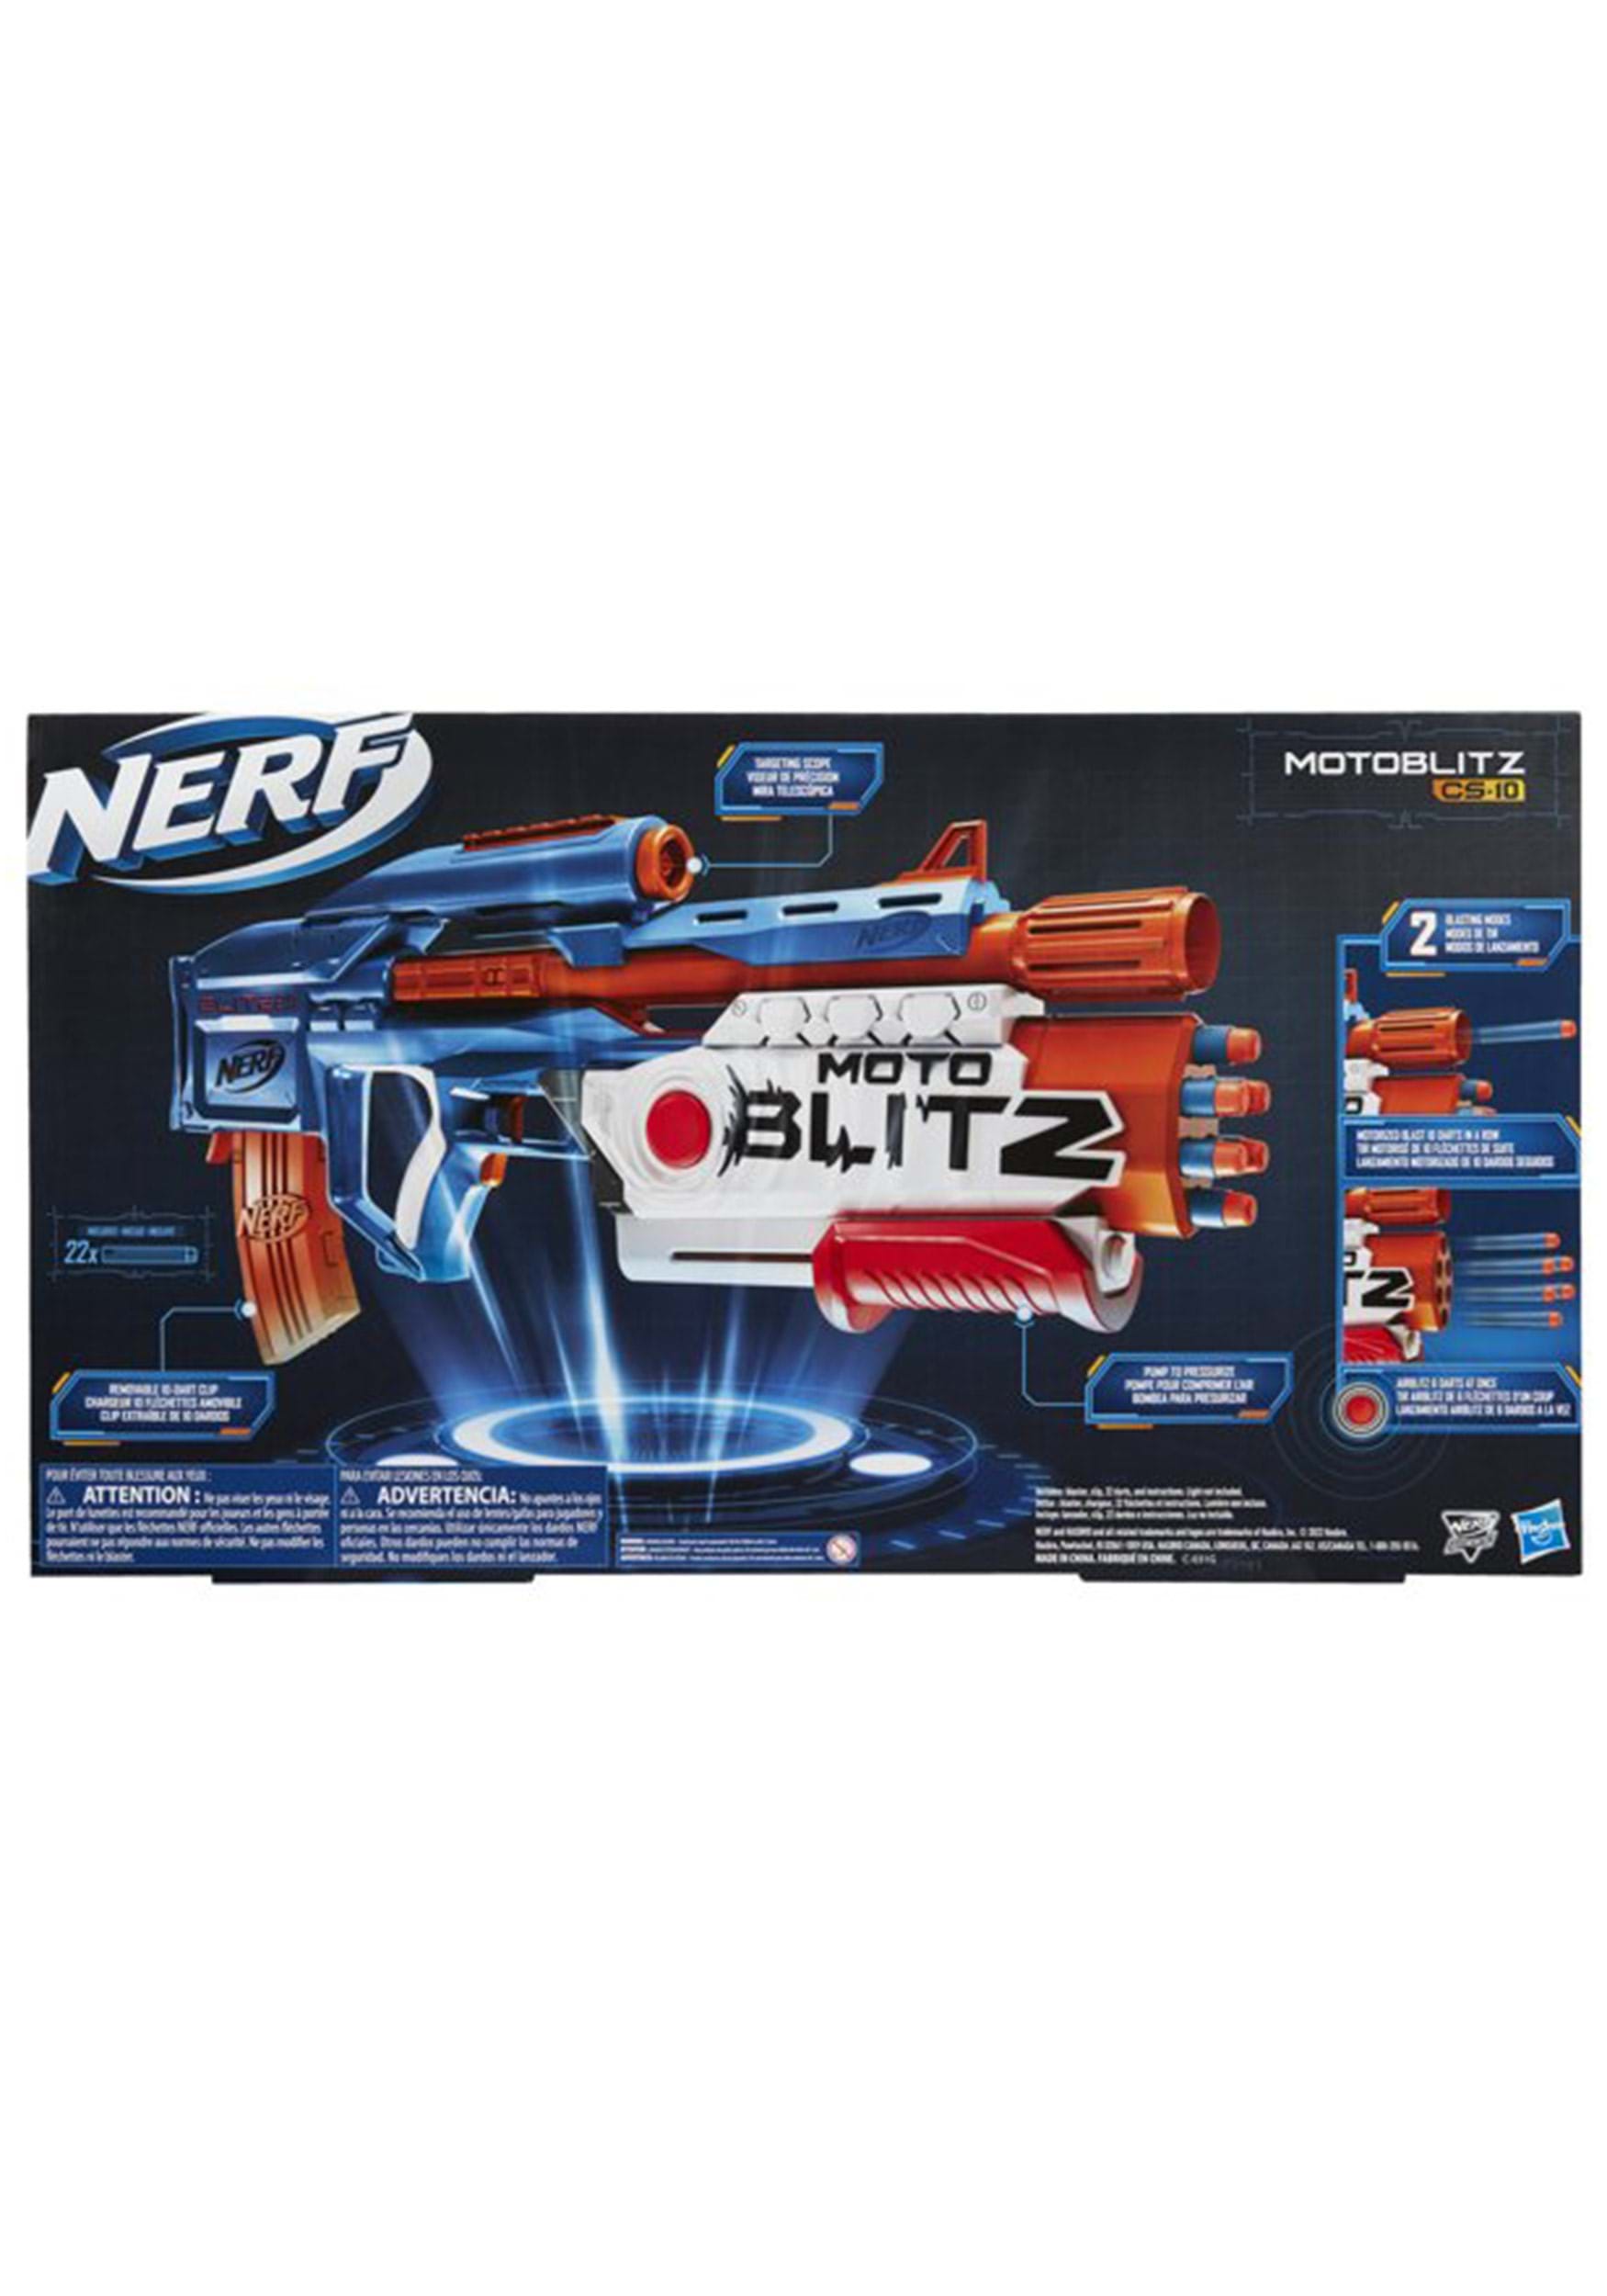 Nerf Elite 2.0 Motoblitz CS-10 Blaster, Motorized 10-Dart Blasting